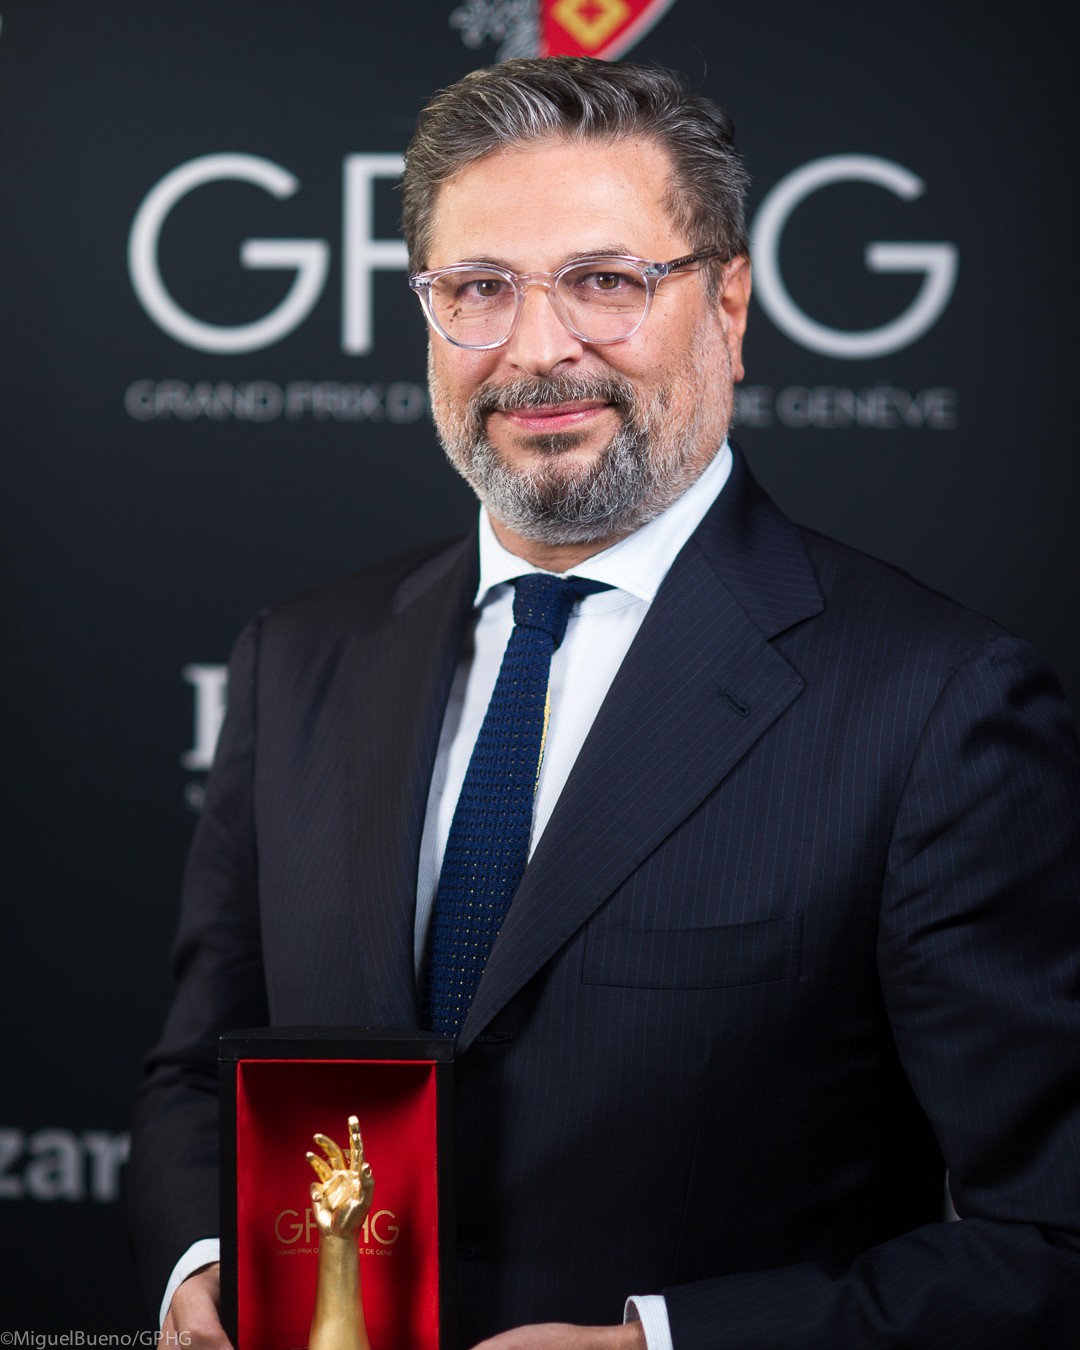 Guido Terreni, Parmigiani Fleurier CEO